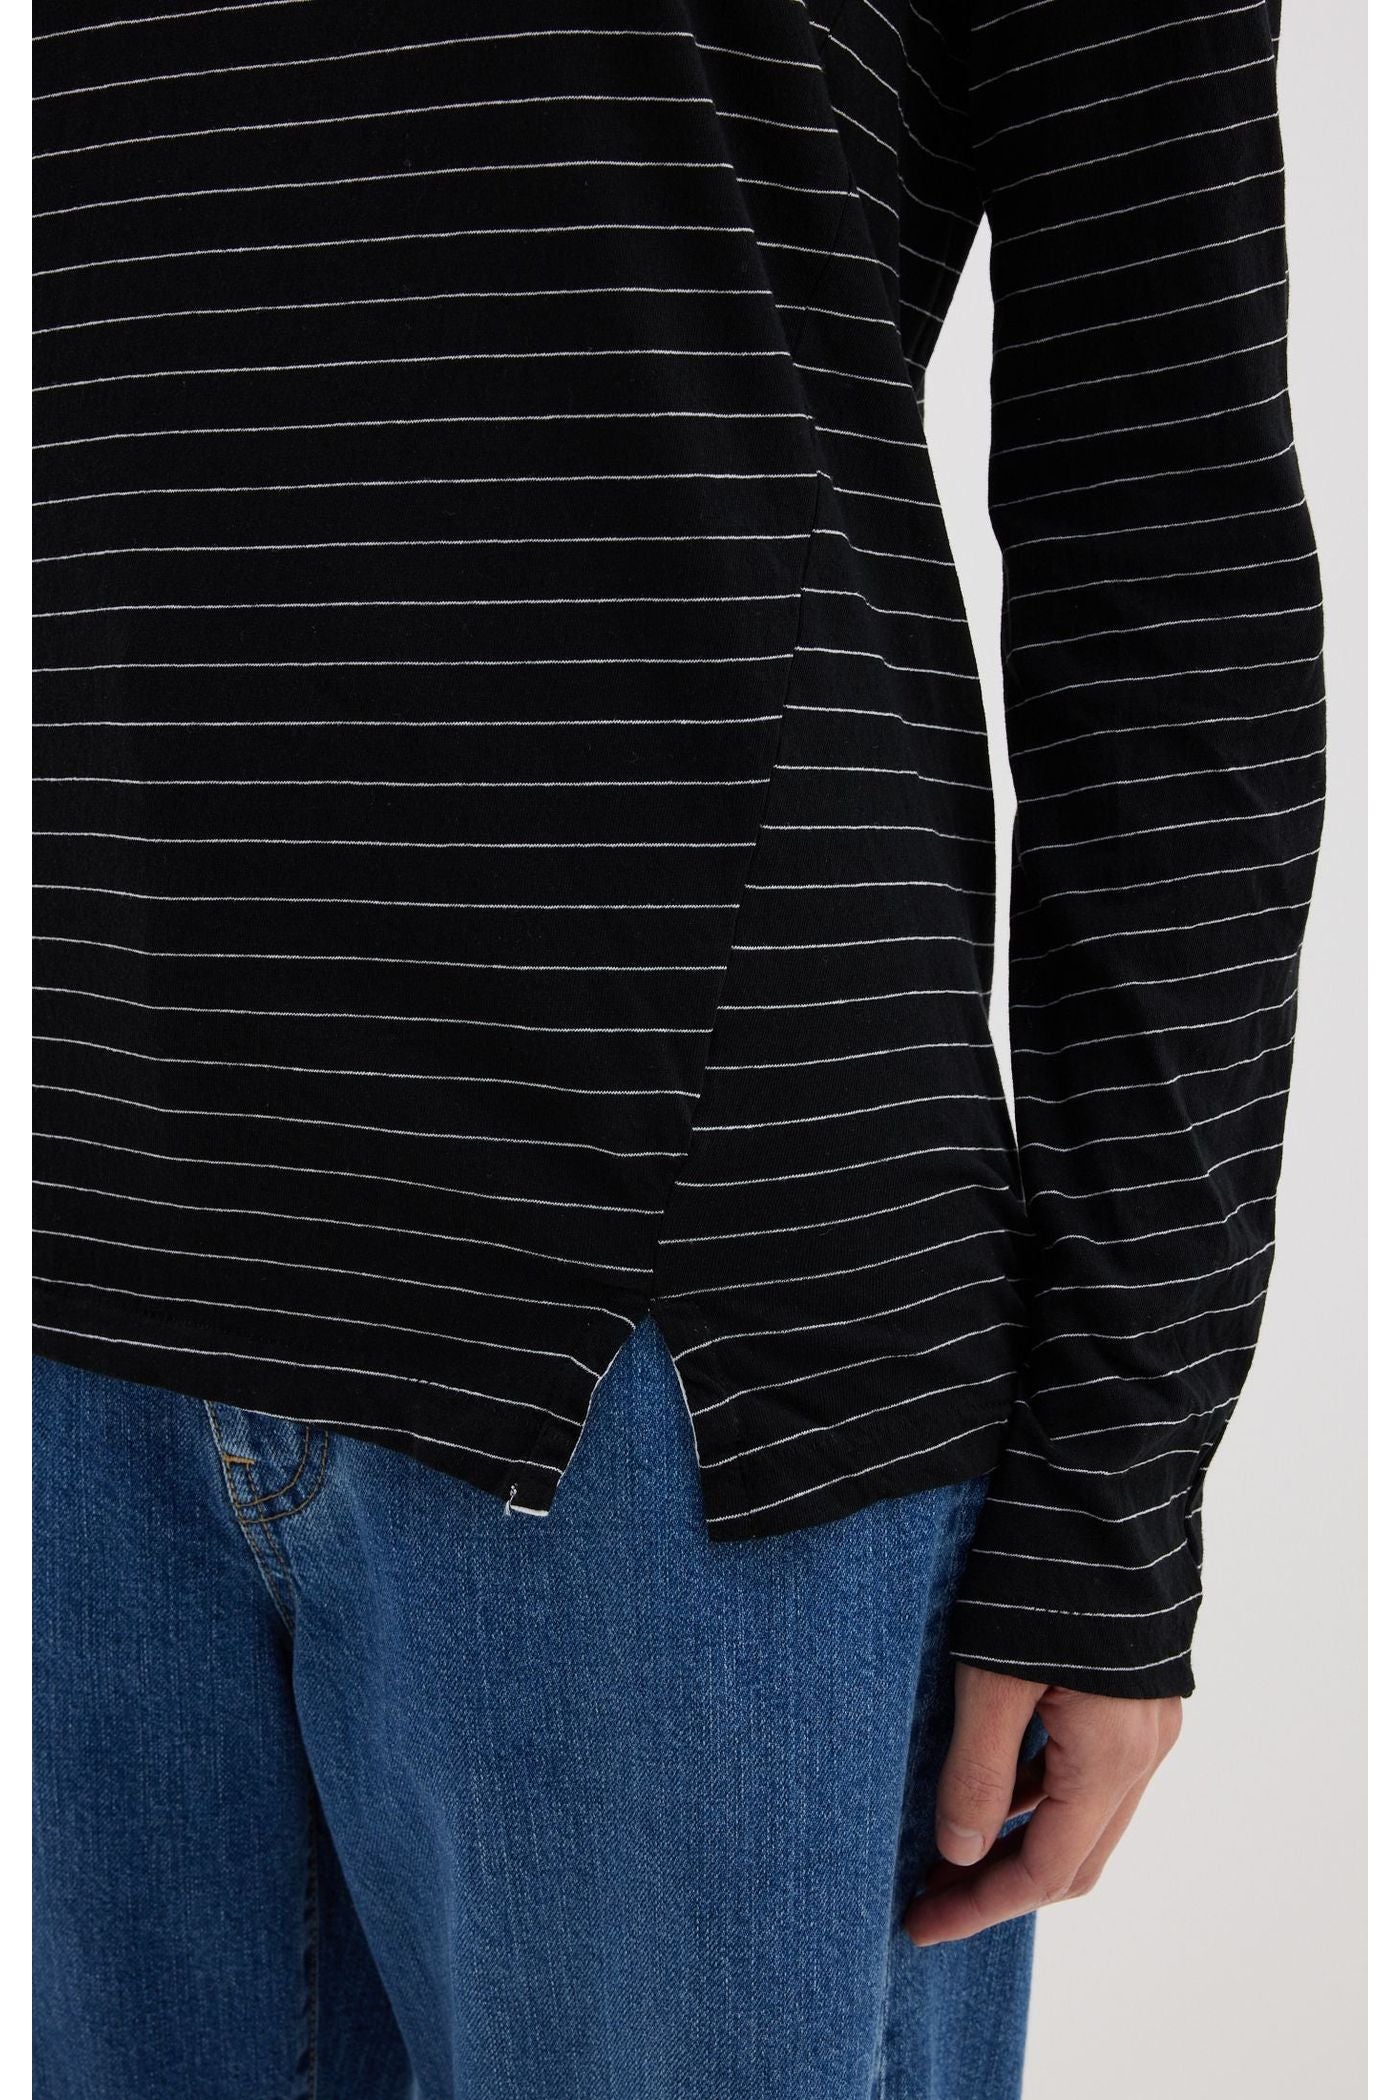 Stripe Funnel Neck Long Sleeve T-shirt in Black / White by Bassike